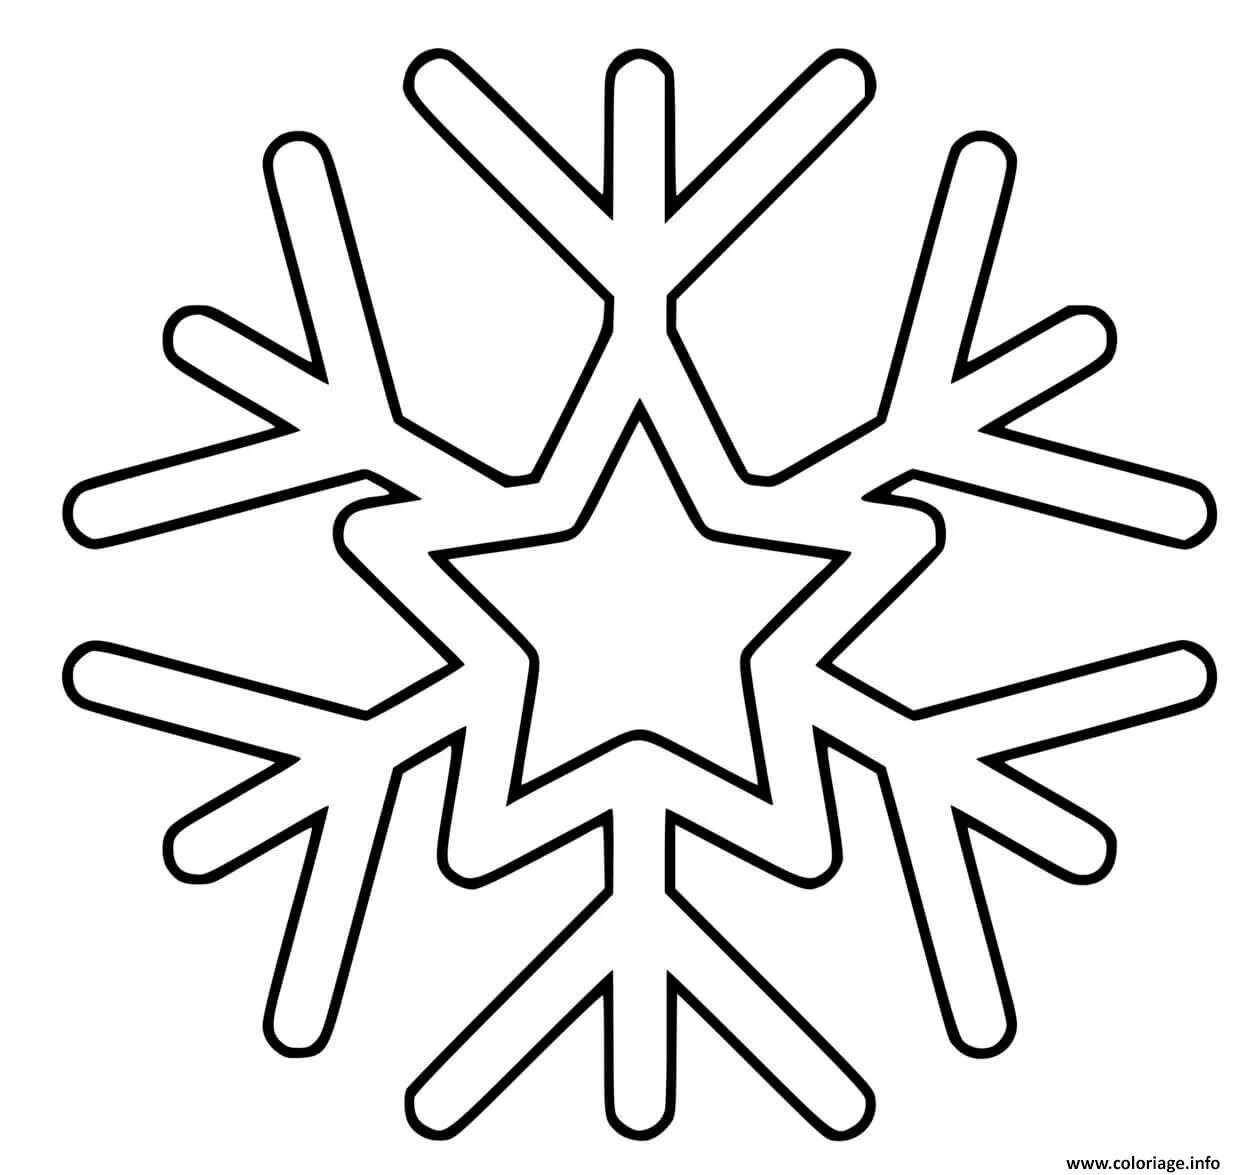 Unique snowflake coloring page